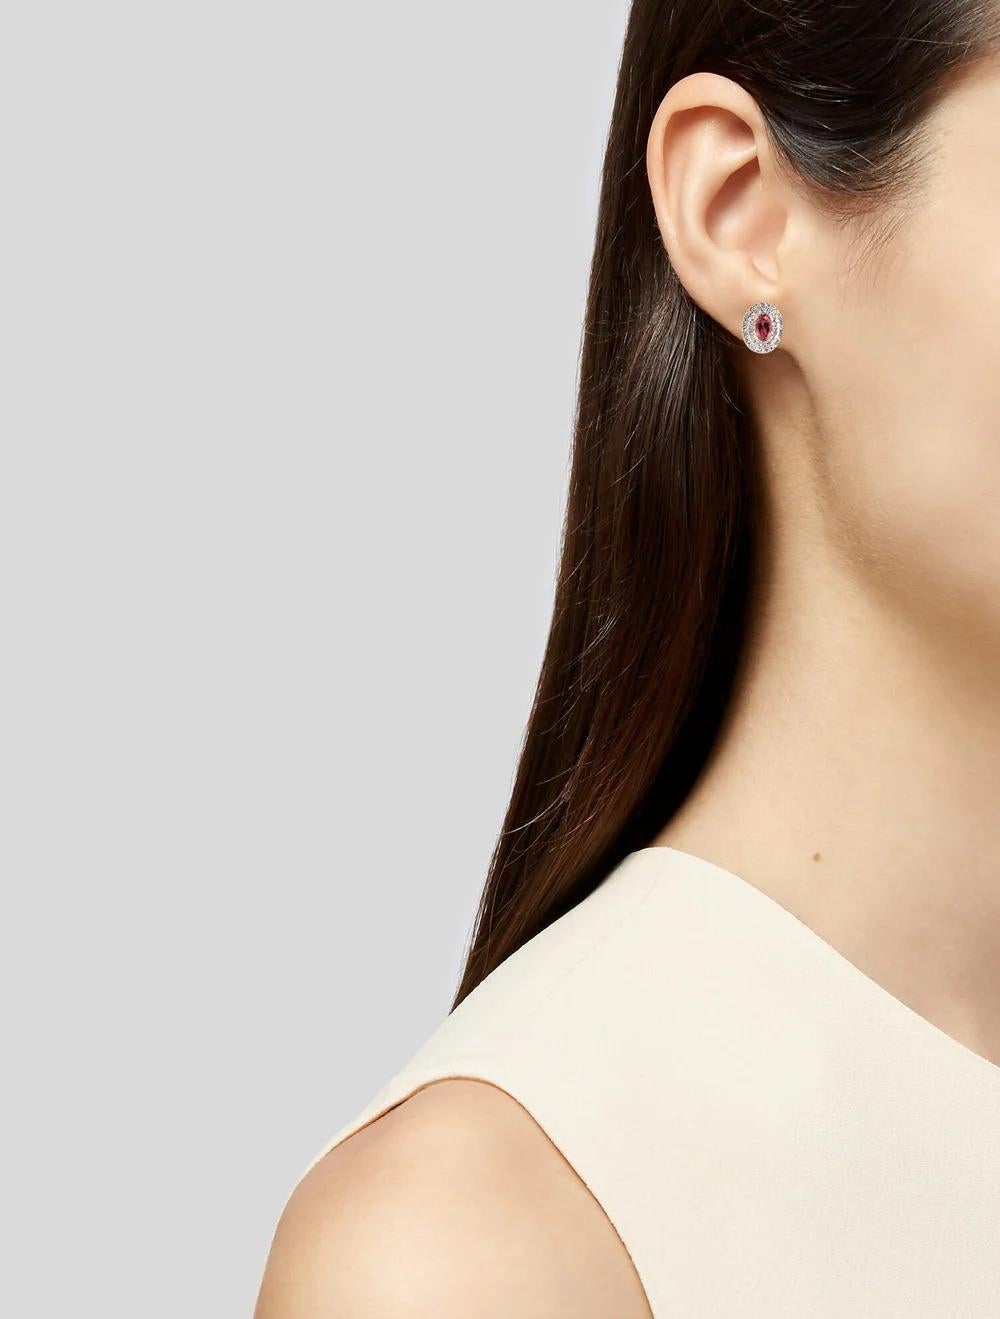 Oval Cut 14K Tourmaline & Diamond Stud Earrings - Elegant Gemstones, Timeless Design For Sale